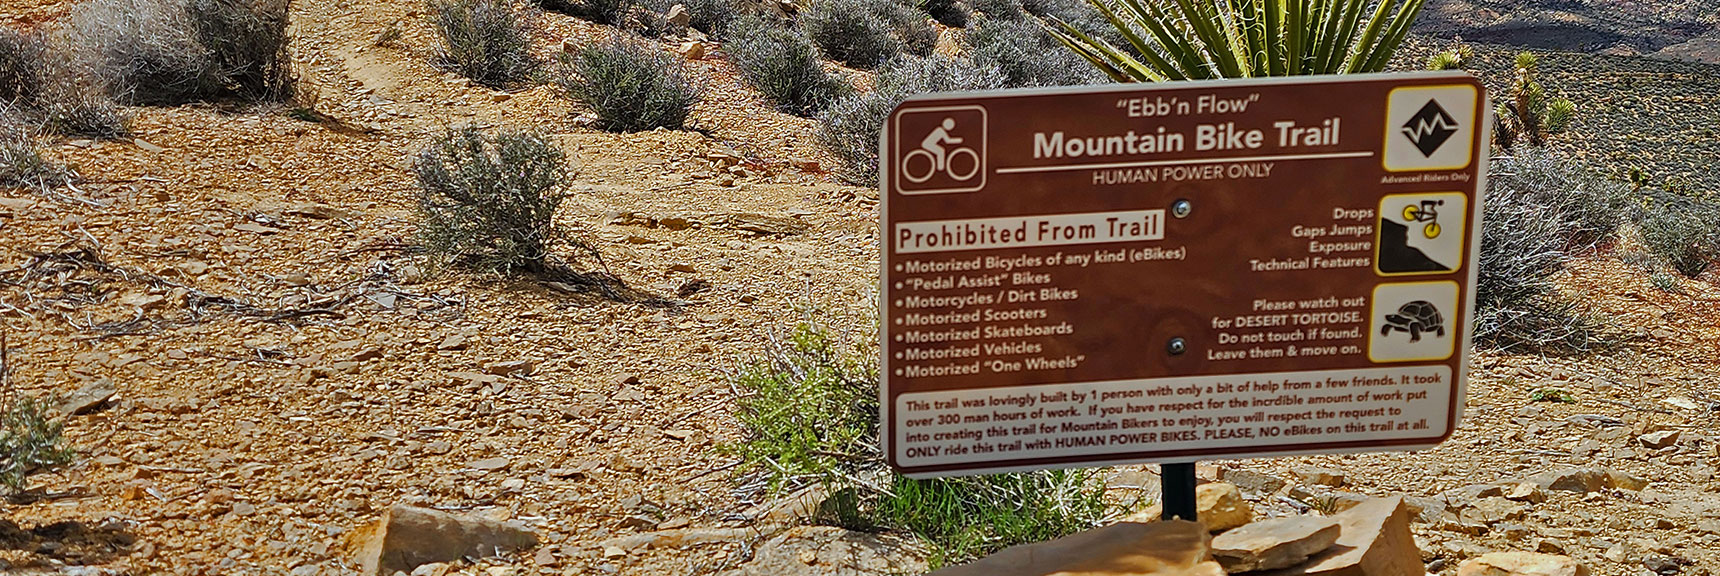 Origin of Awesome Hiking & Mountain Biking Trails Around Ridgeline. | Western High Ridge | Blue Diamond Hill, Nevada